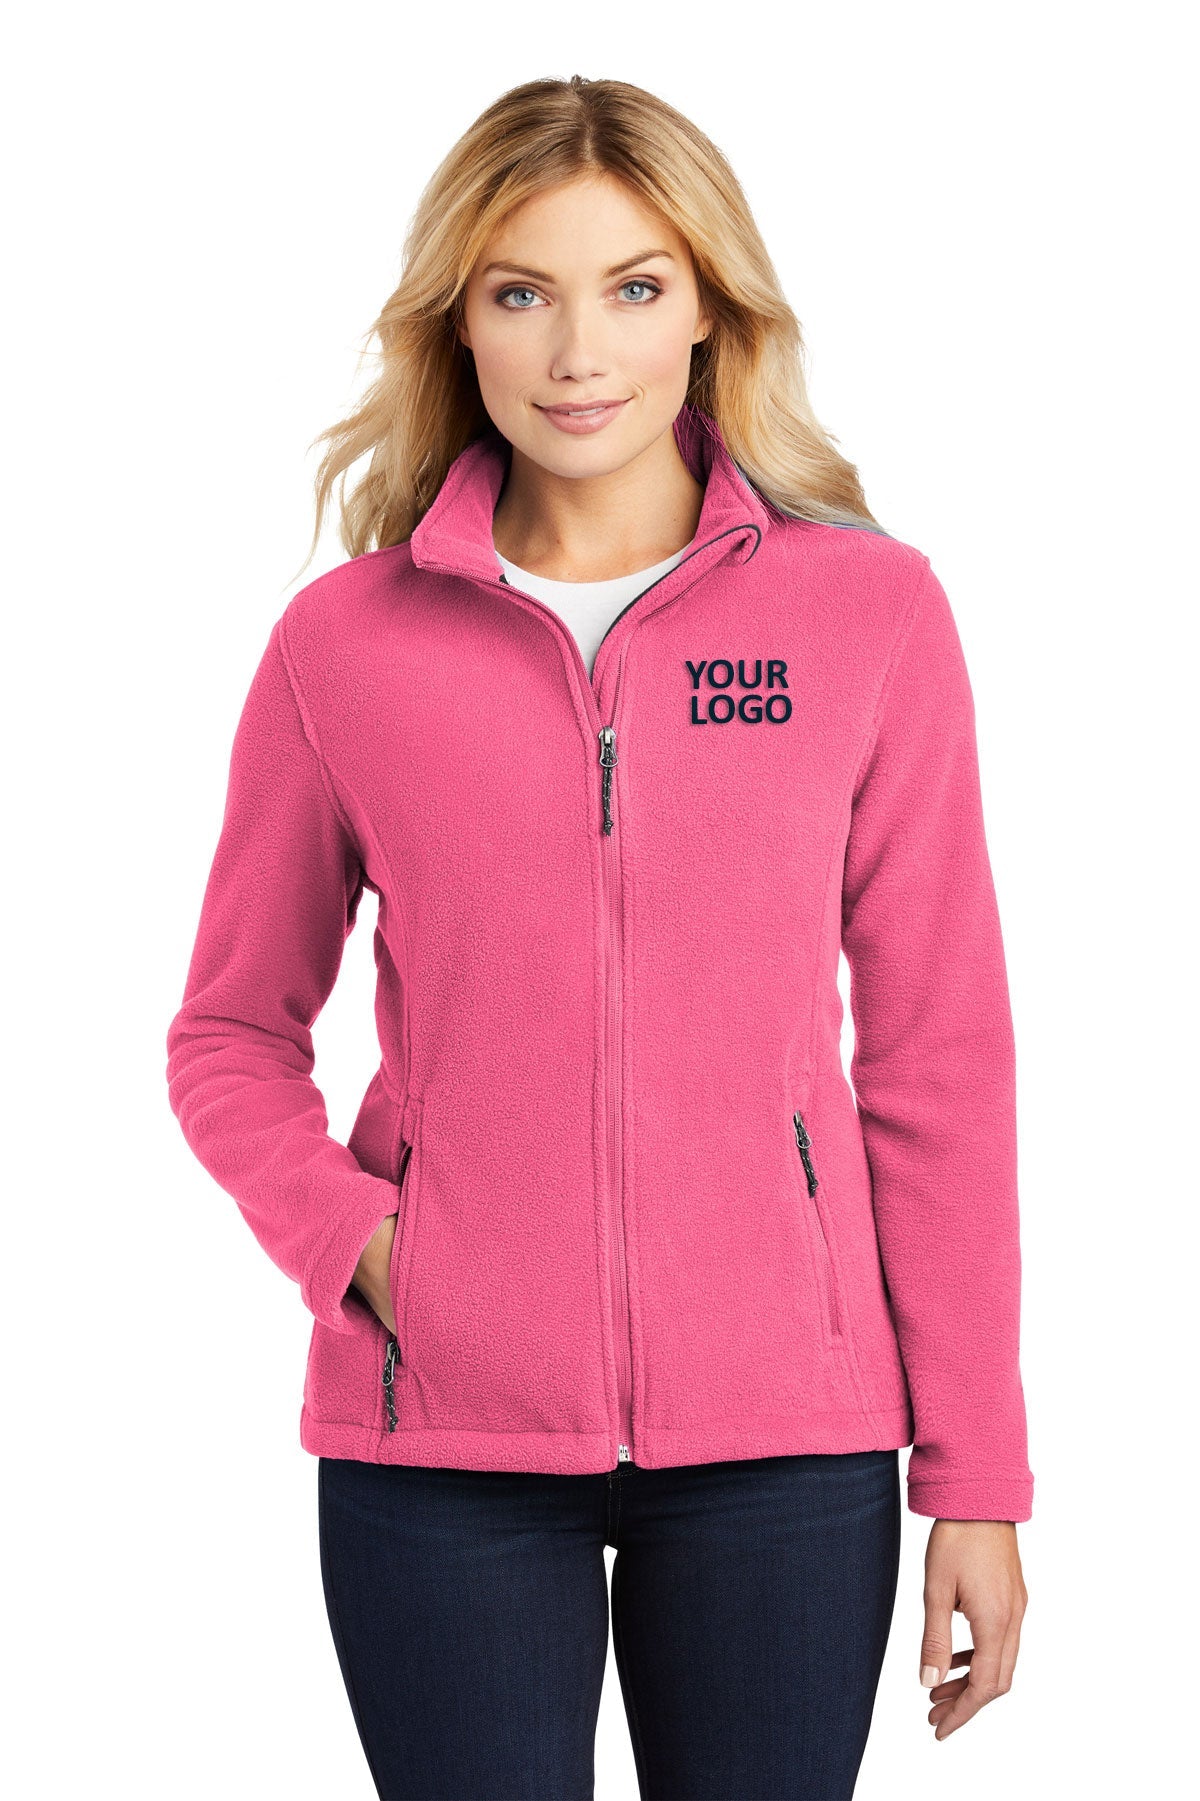 Port Authority Ladies Value Fleece Jacket L217 Pink Blossom